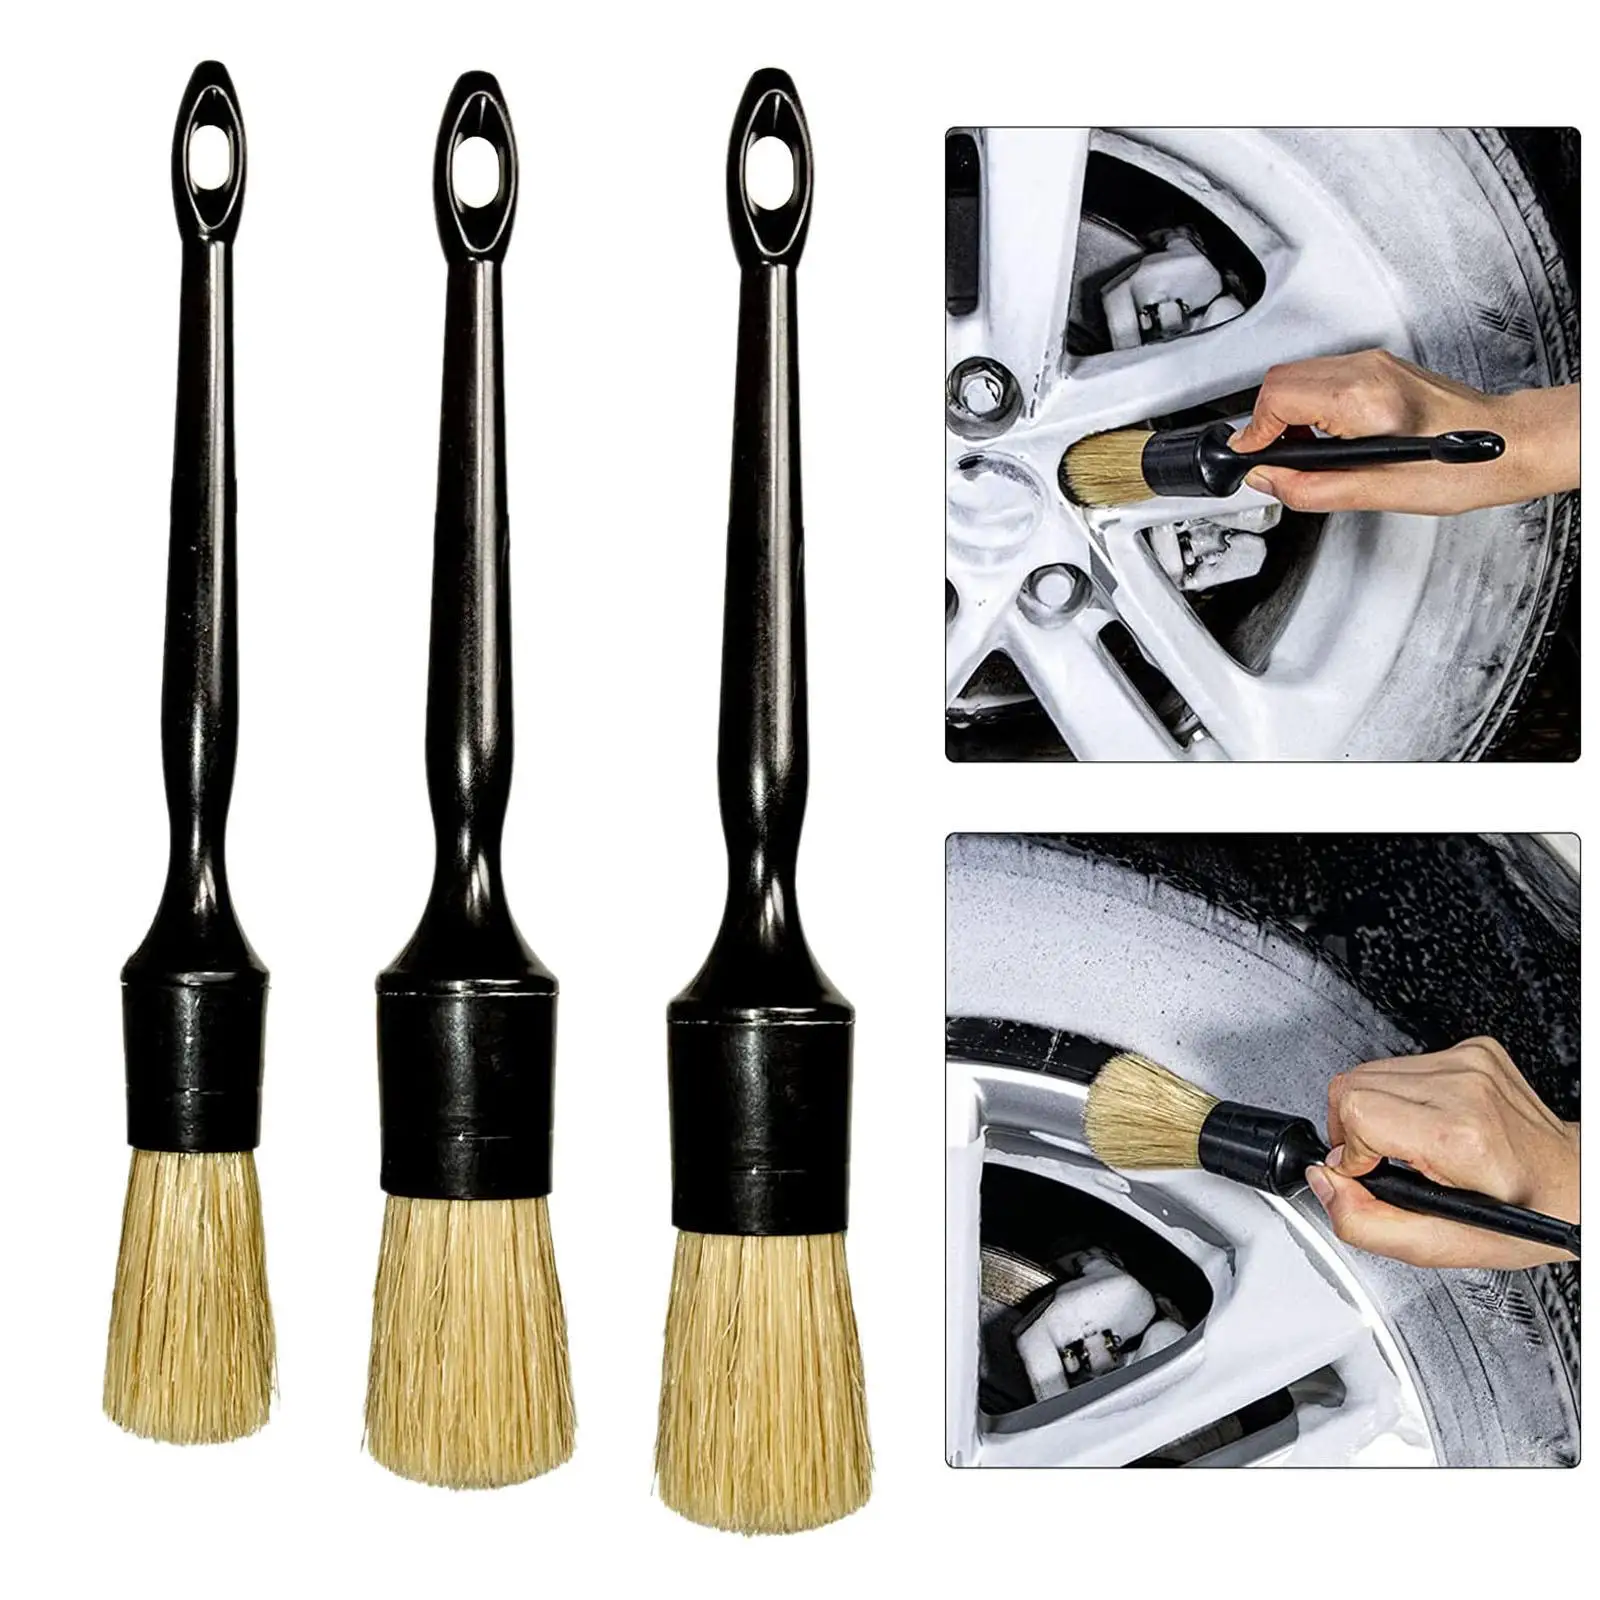 3x Auto Detail Brush Set Multi Purpose for Interior Exterior Lug Nut